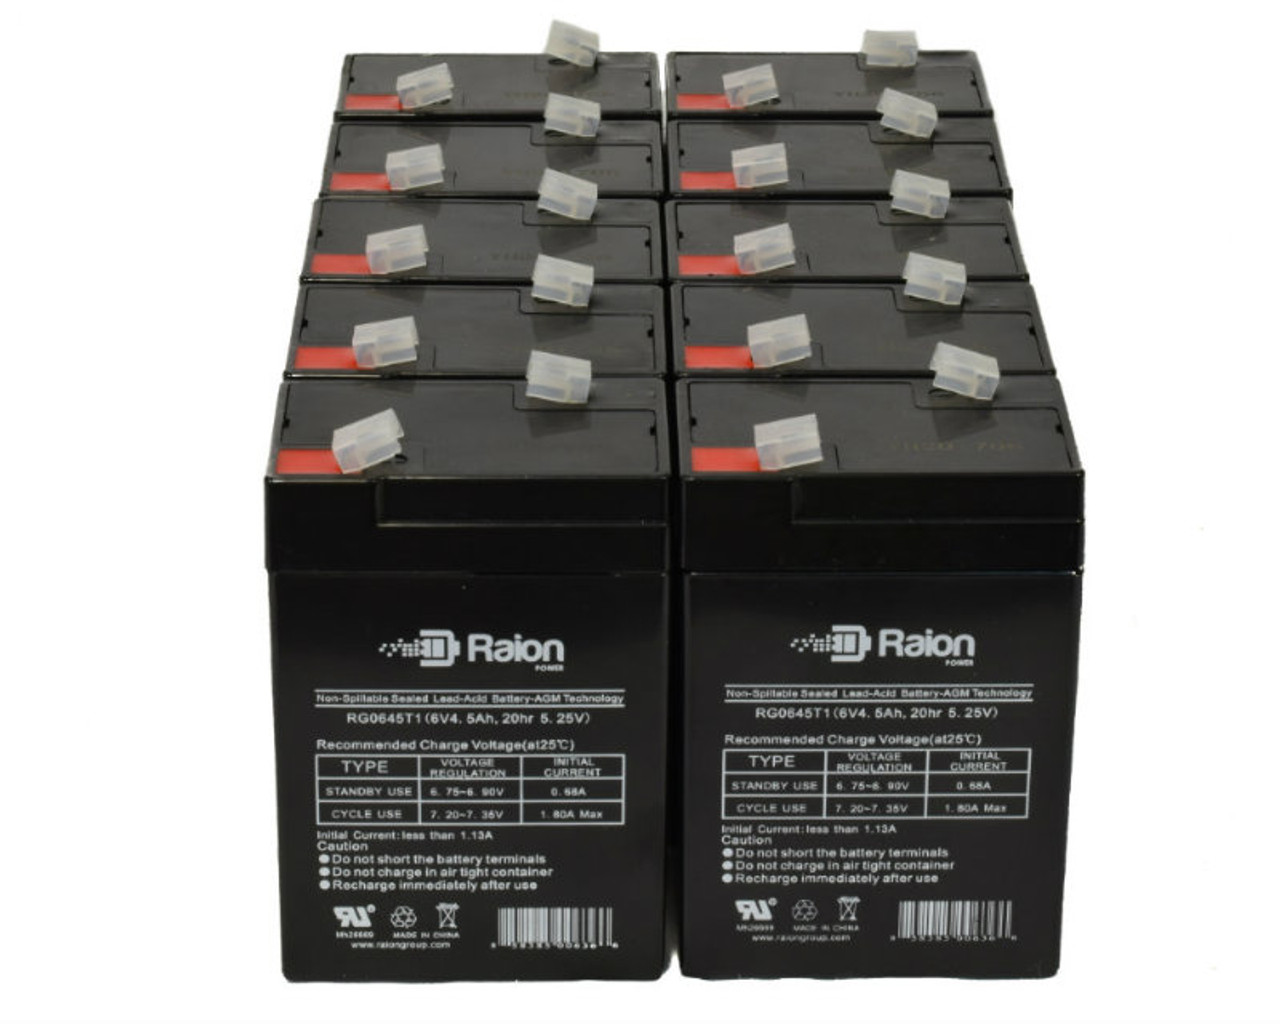 Raion Power 6V 4.5Ah Replacement Emergency Light Battery for Sonnenschein A206/4.0K - 10 Pack